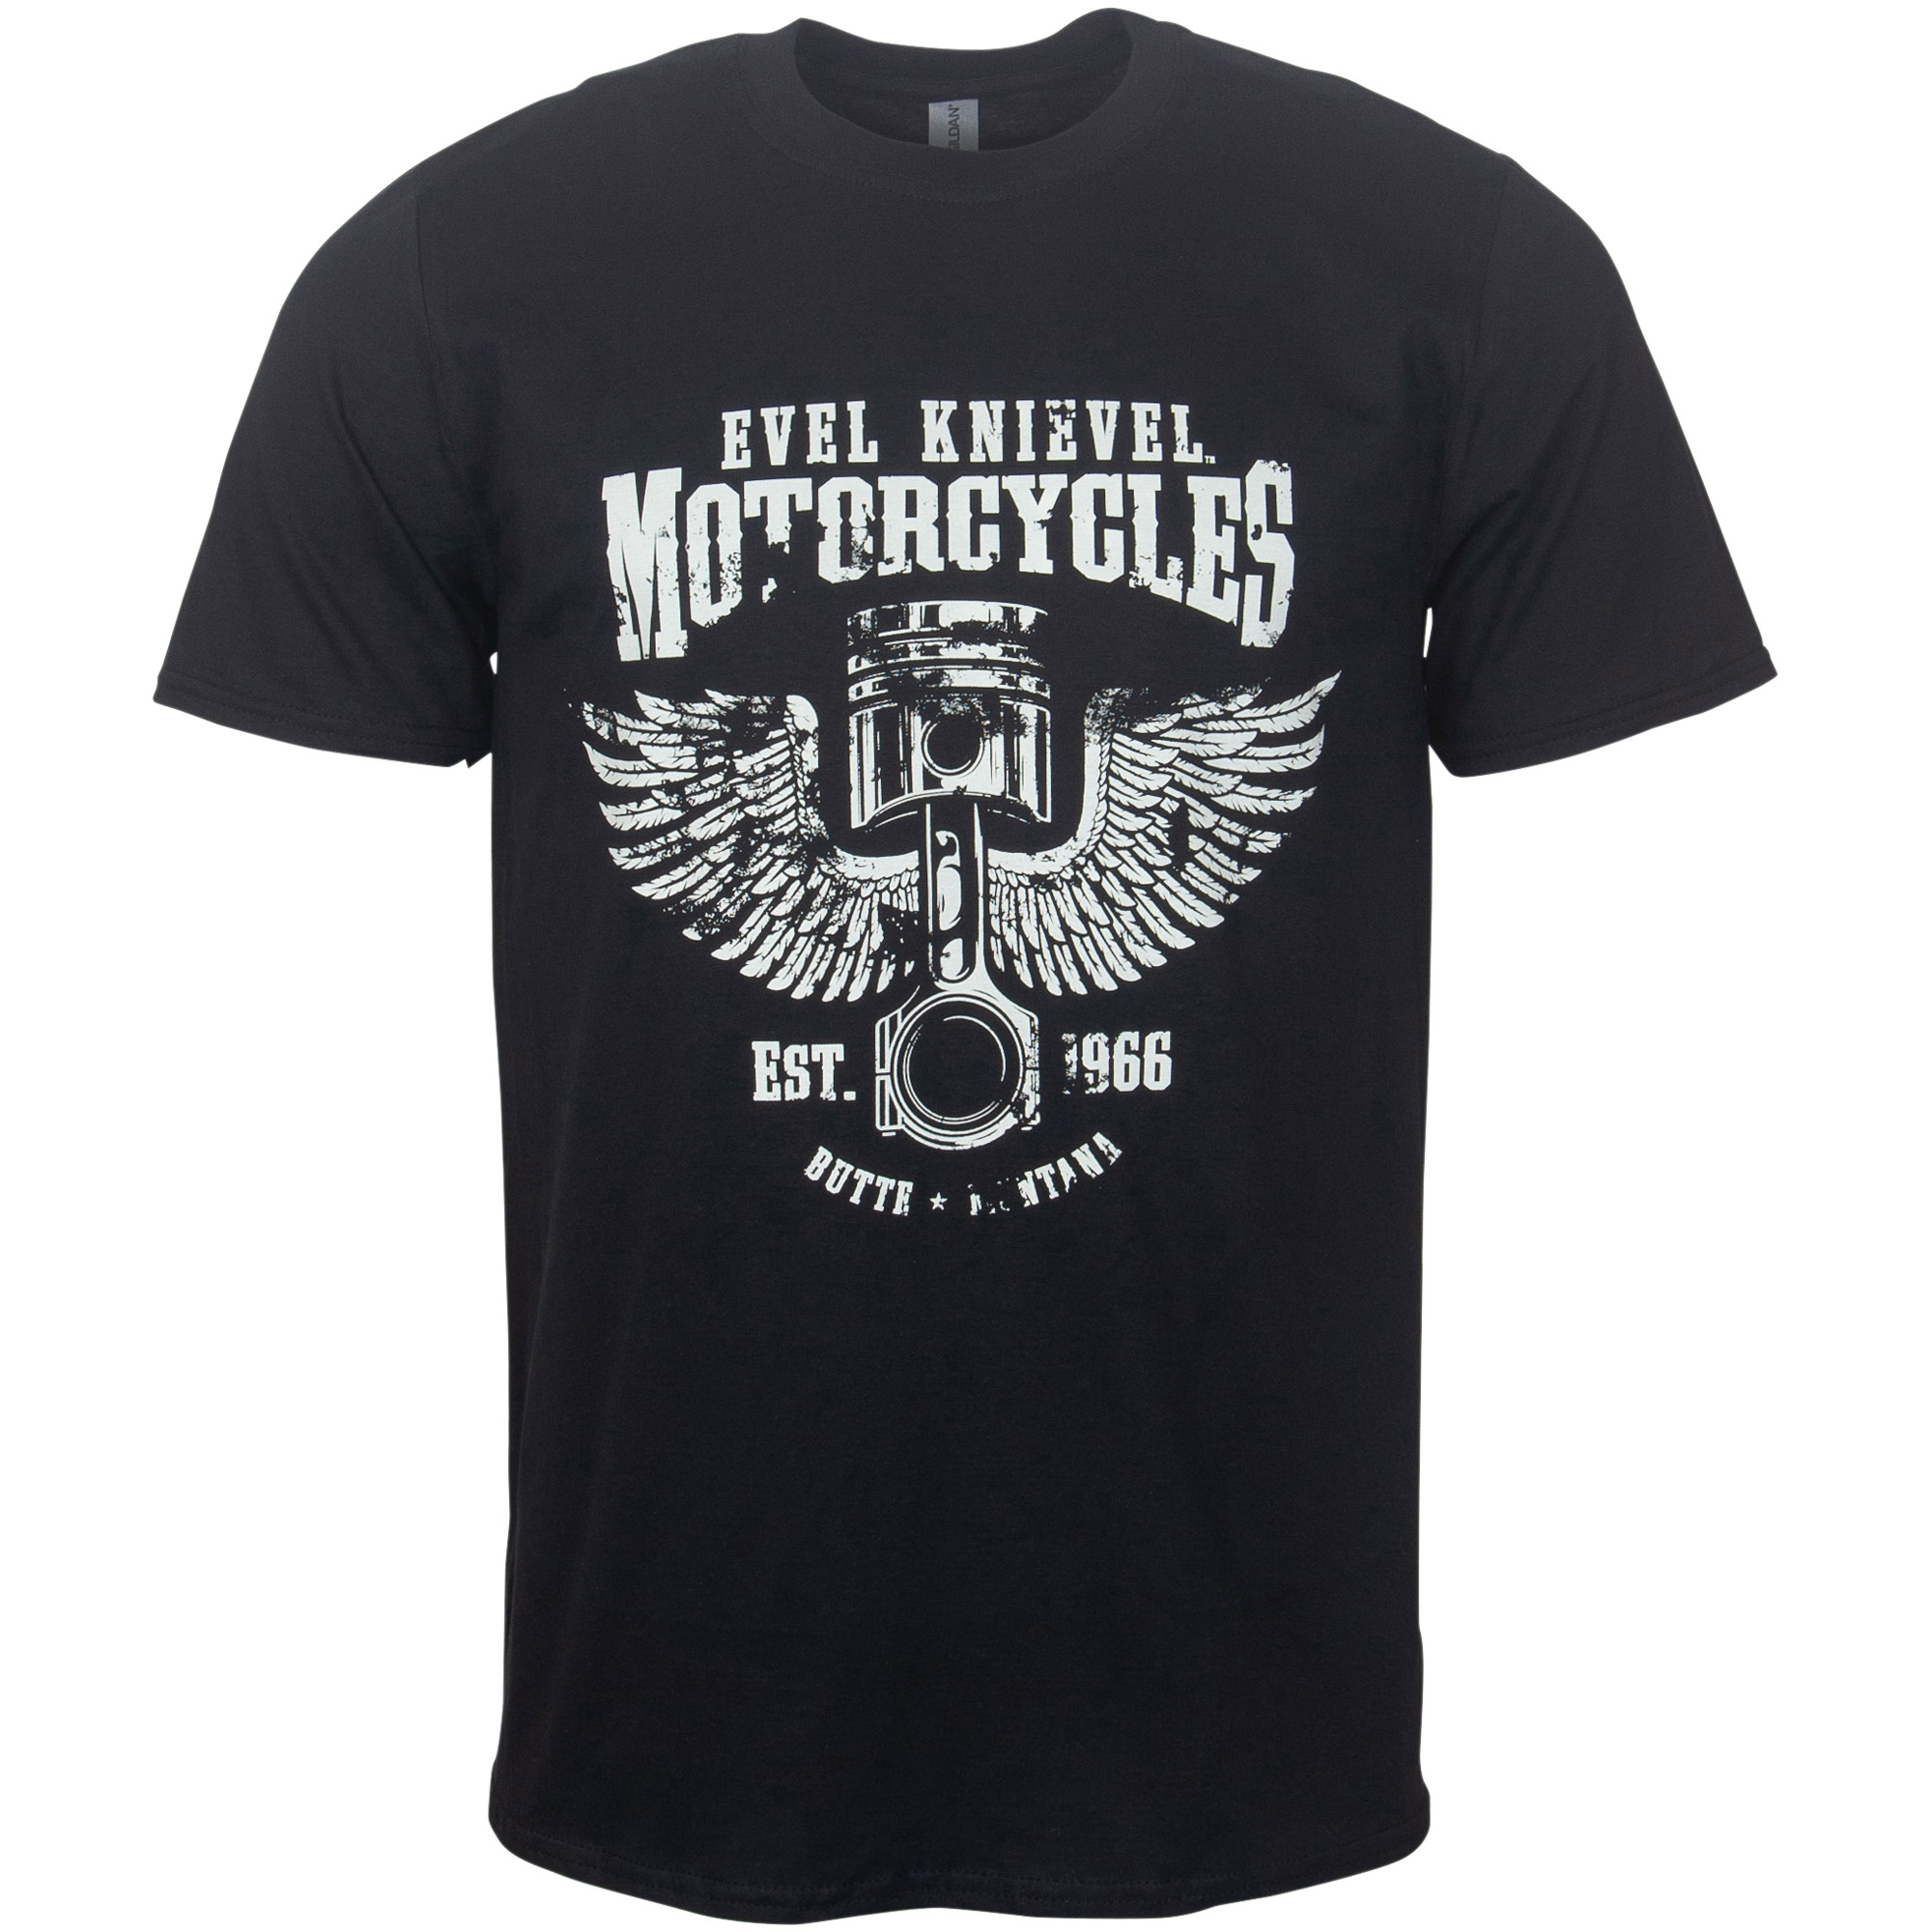 Evel Knievel t-shirt "Motorcycles" - black